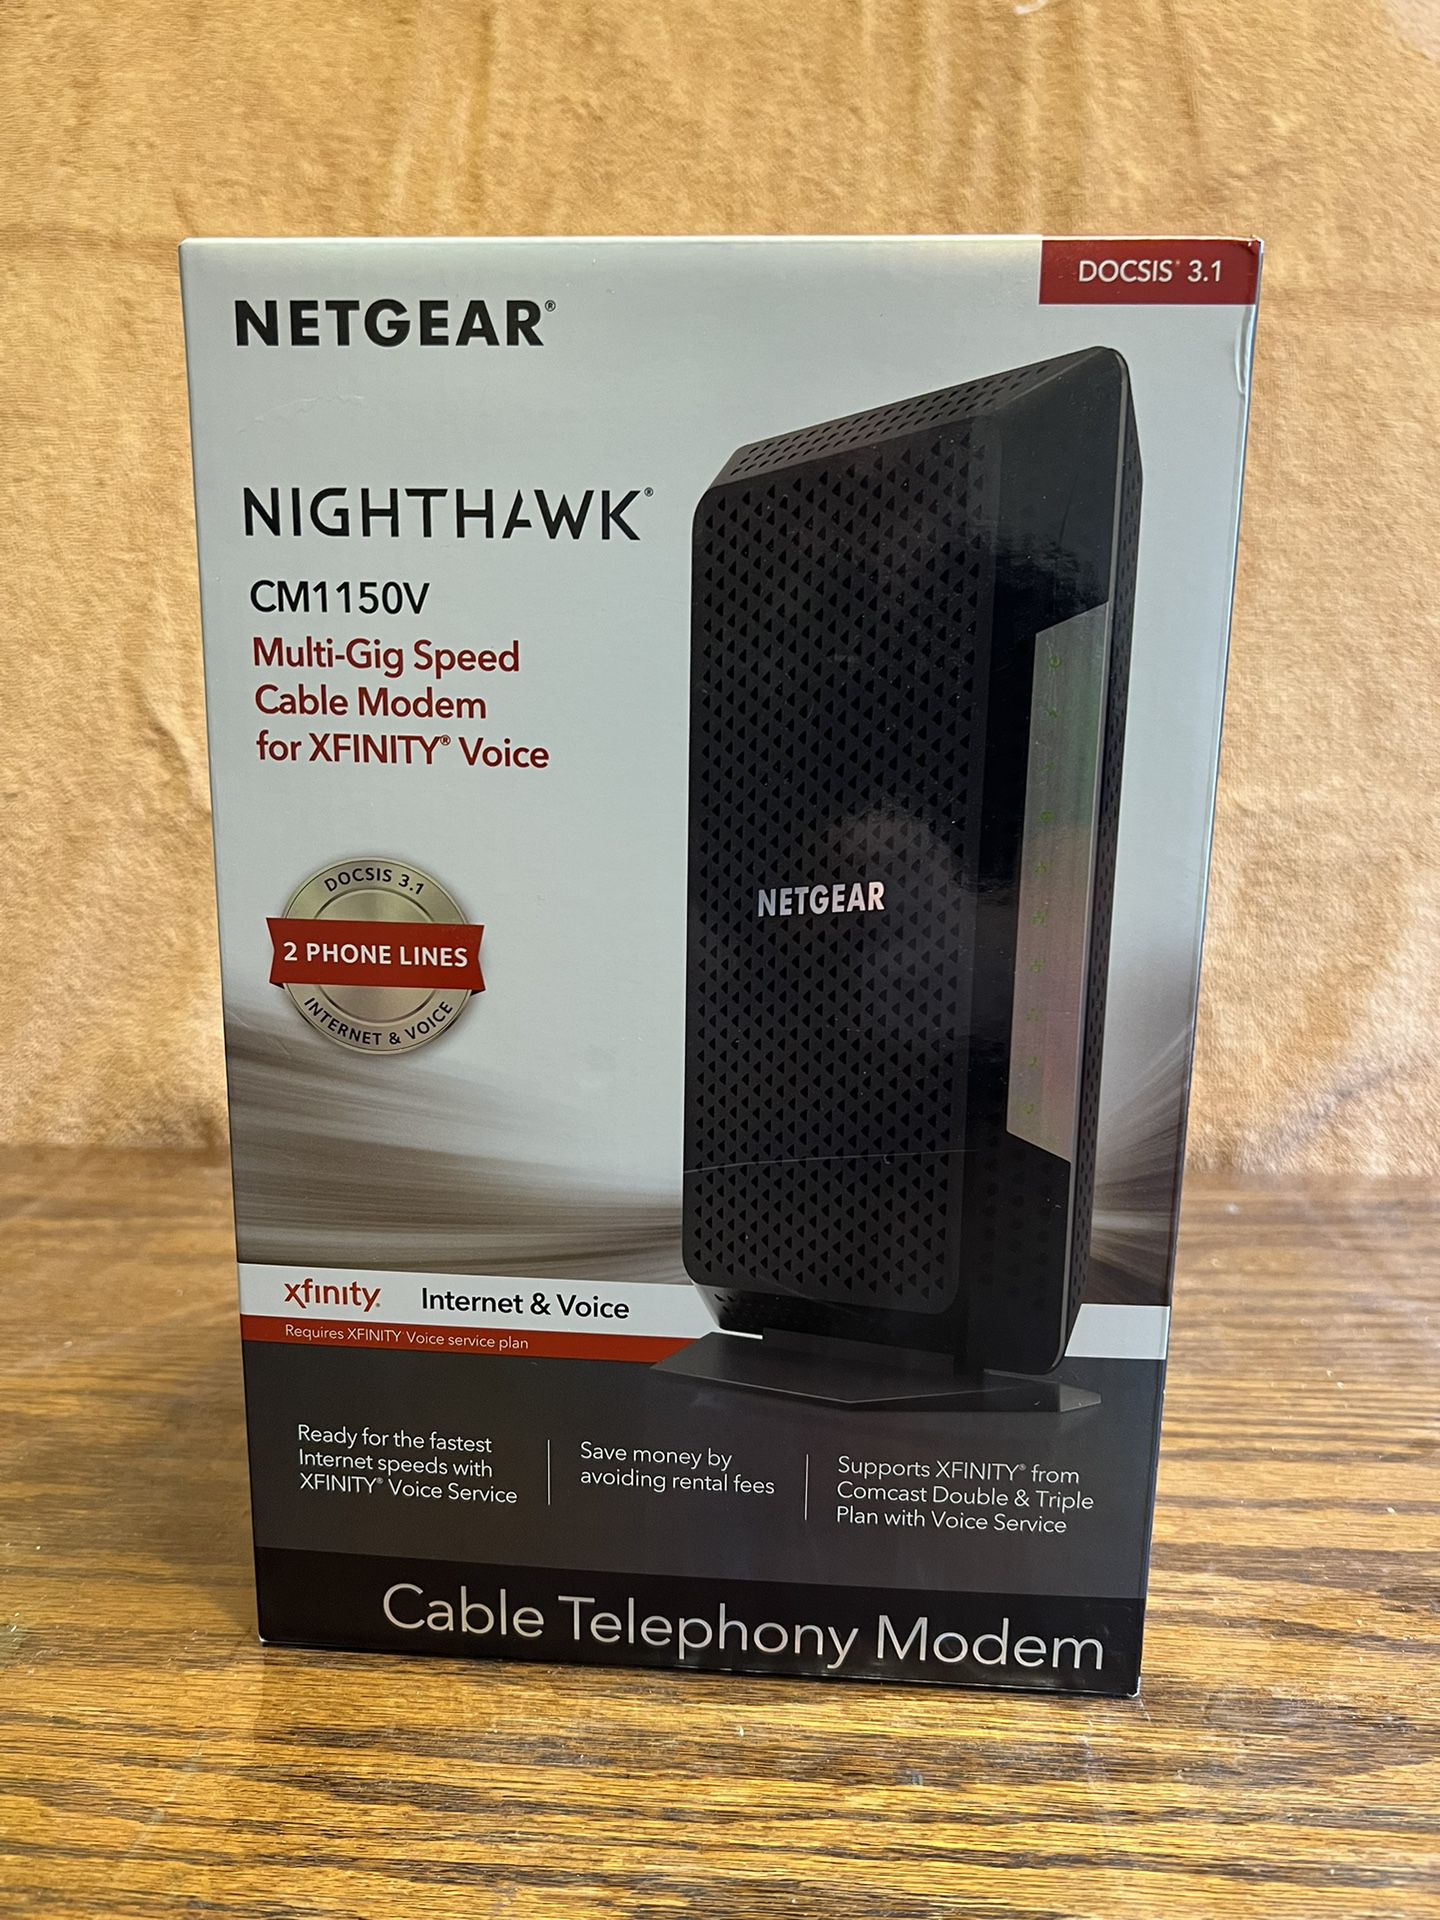 Netgear Nighthawk Cable Telephony Modem